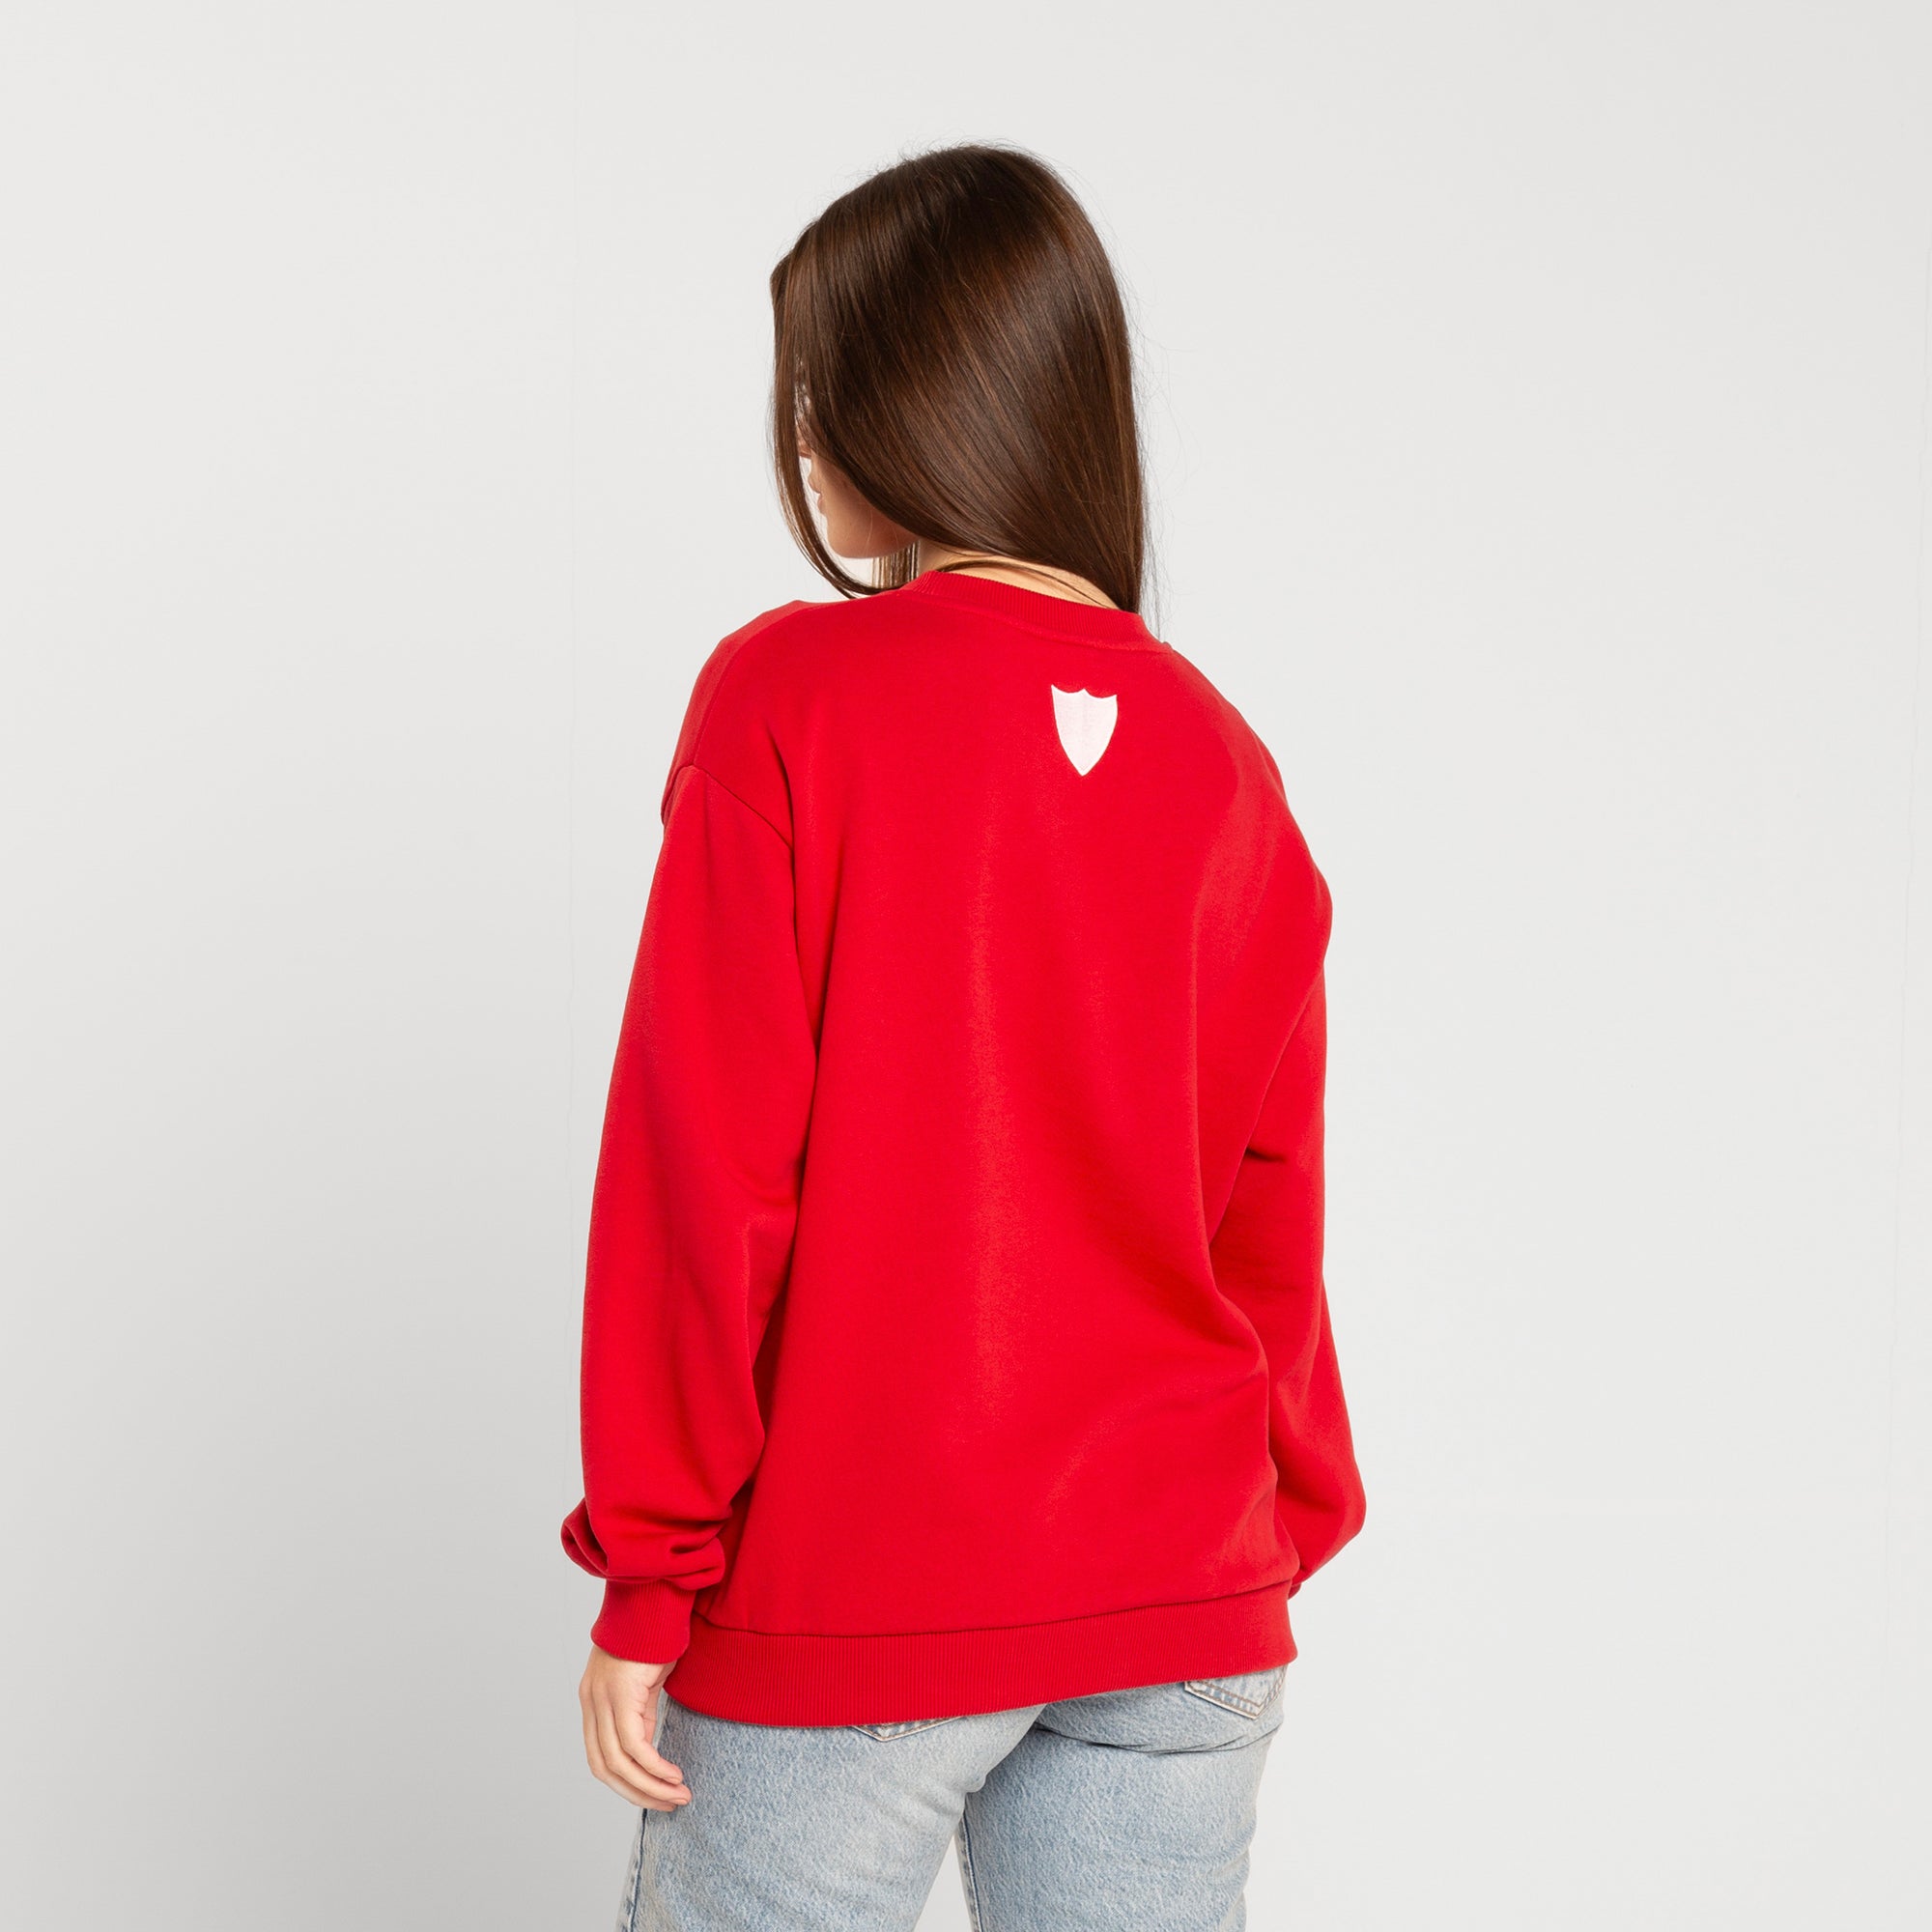 Women's Red sweatshirt with crests 23/24